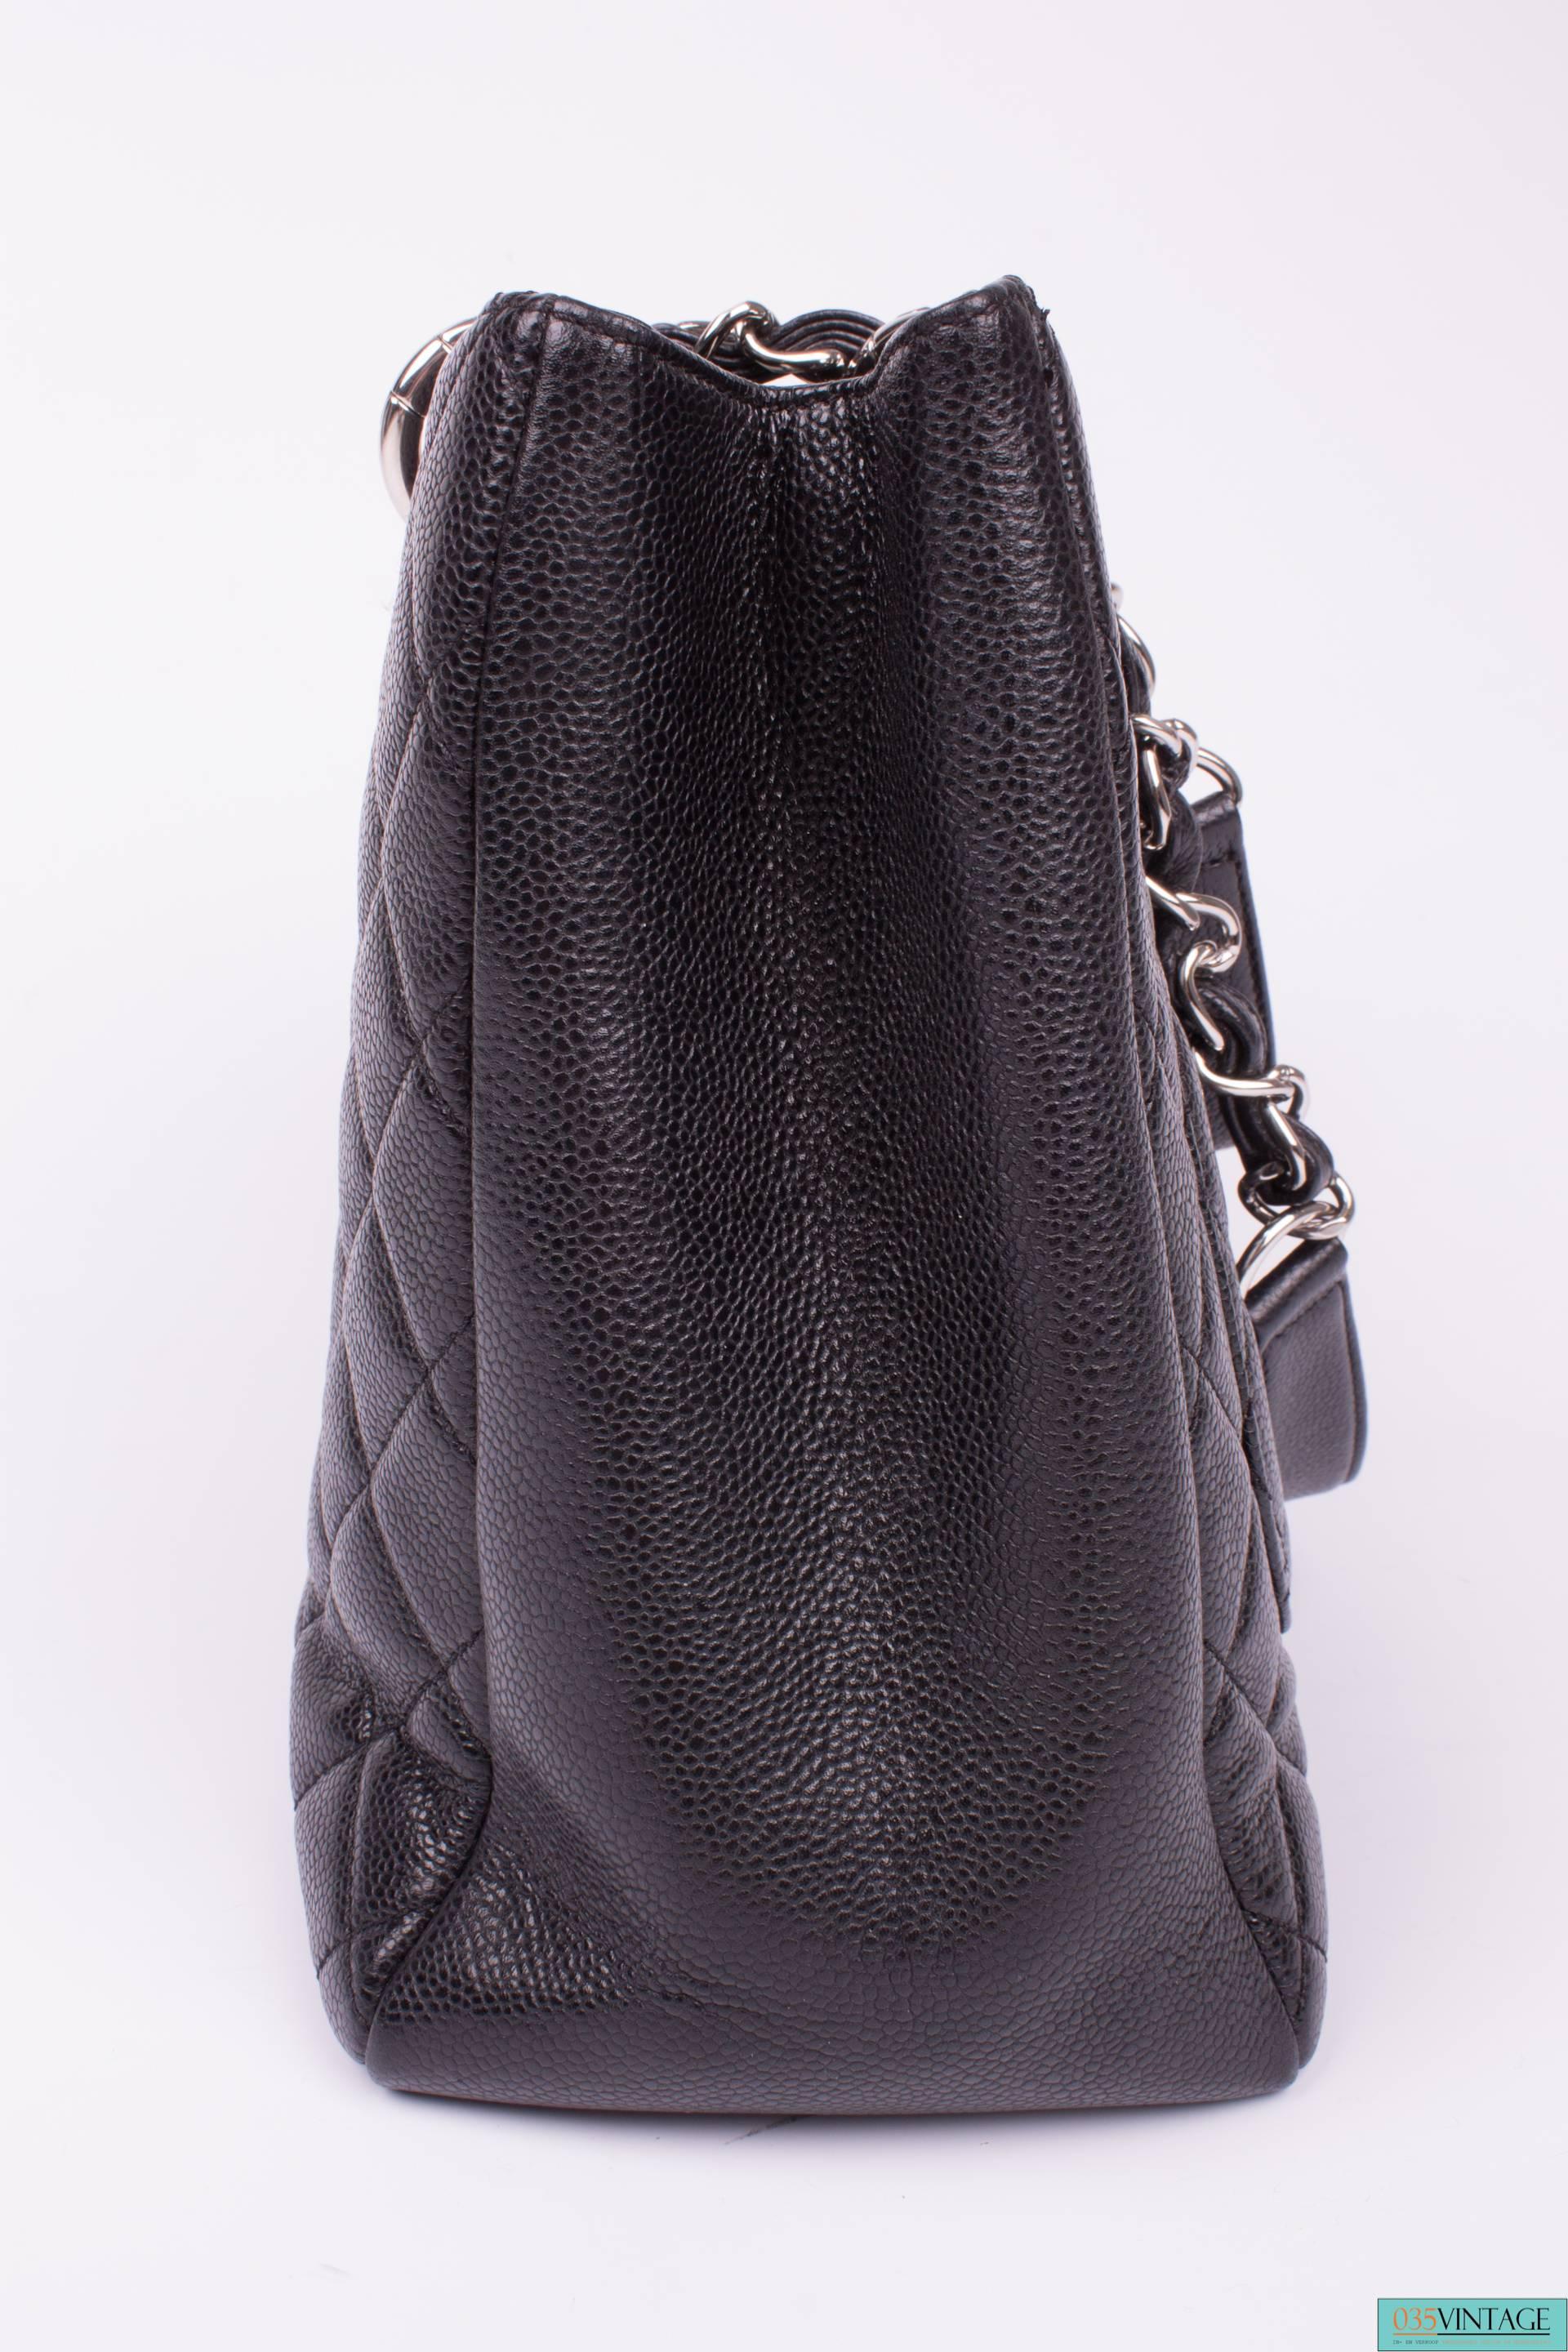 Chanel Grand Shopper Bag - black caviar leather 1